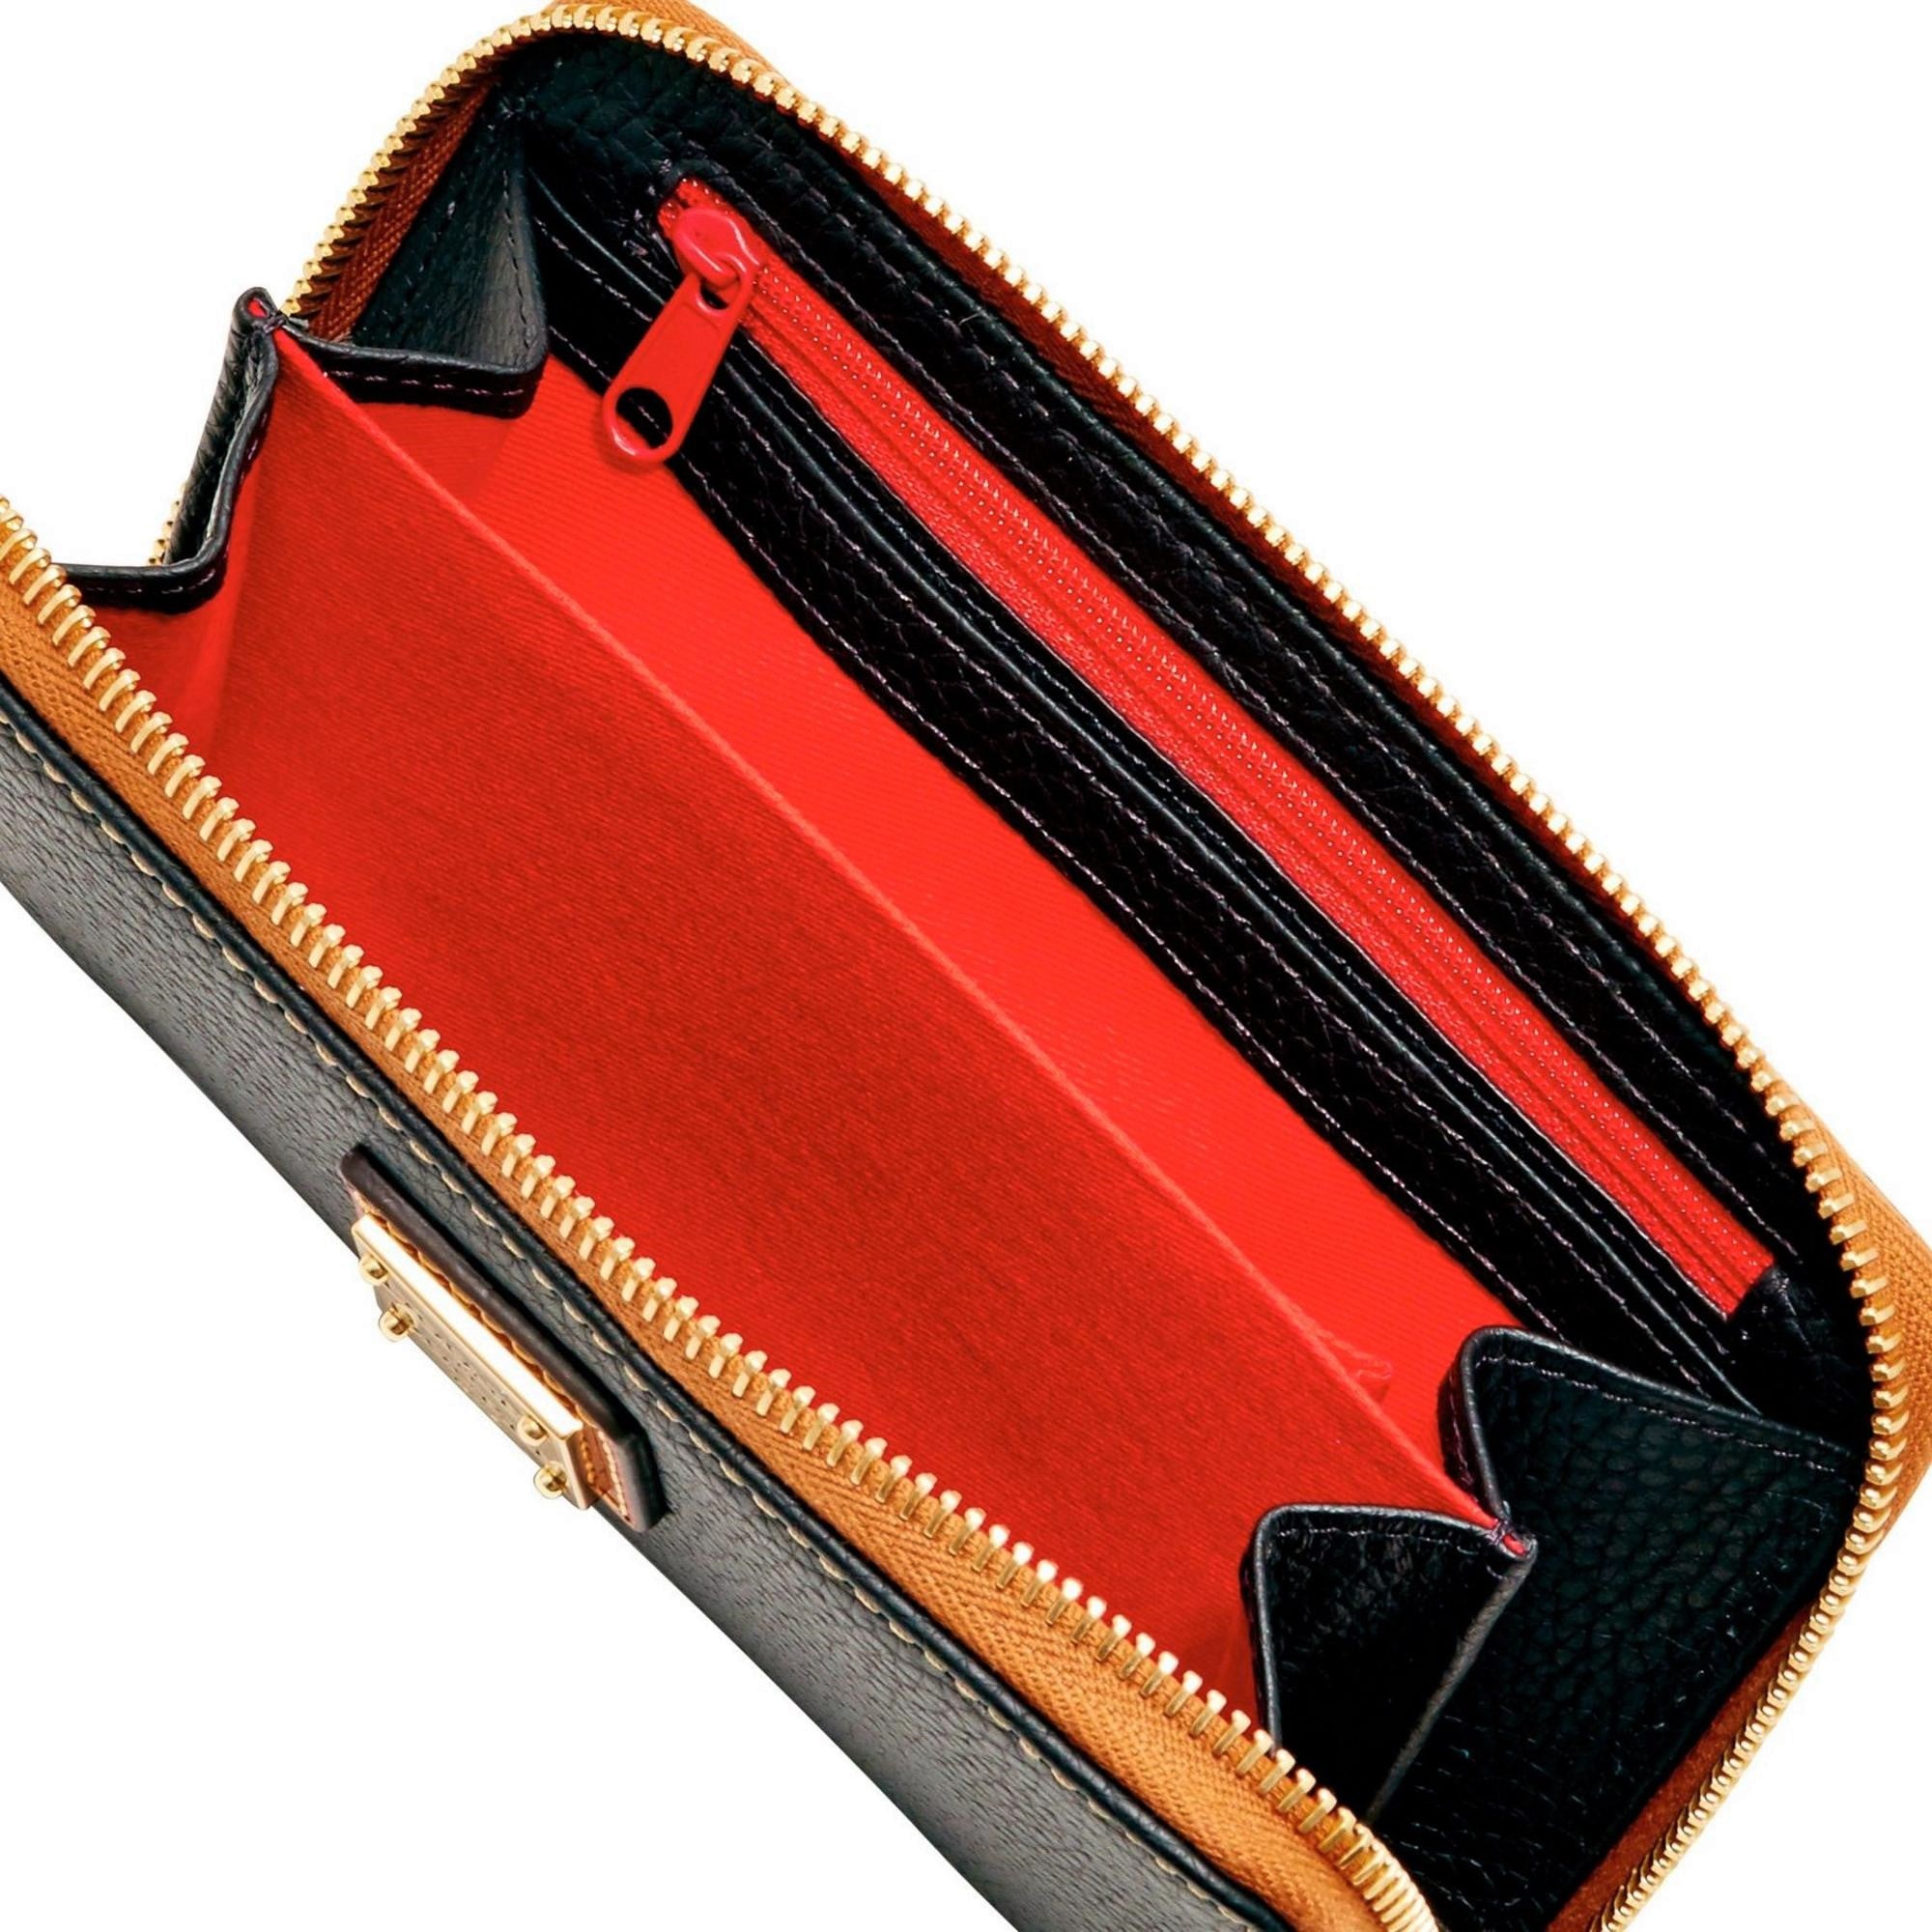 Dooney & Bourke Saffiano Small Zip Around Wallet in Red